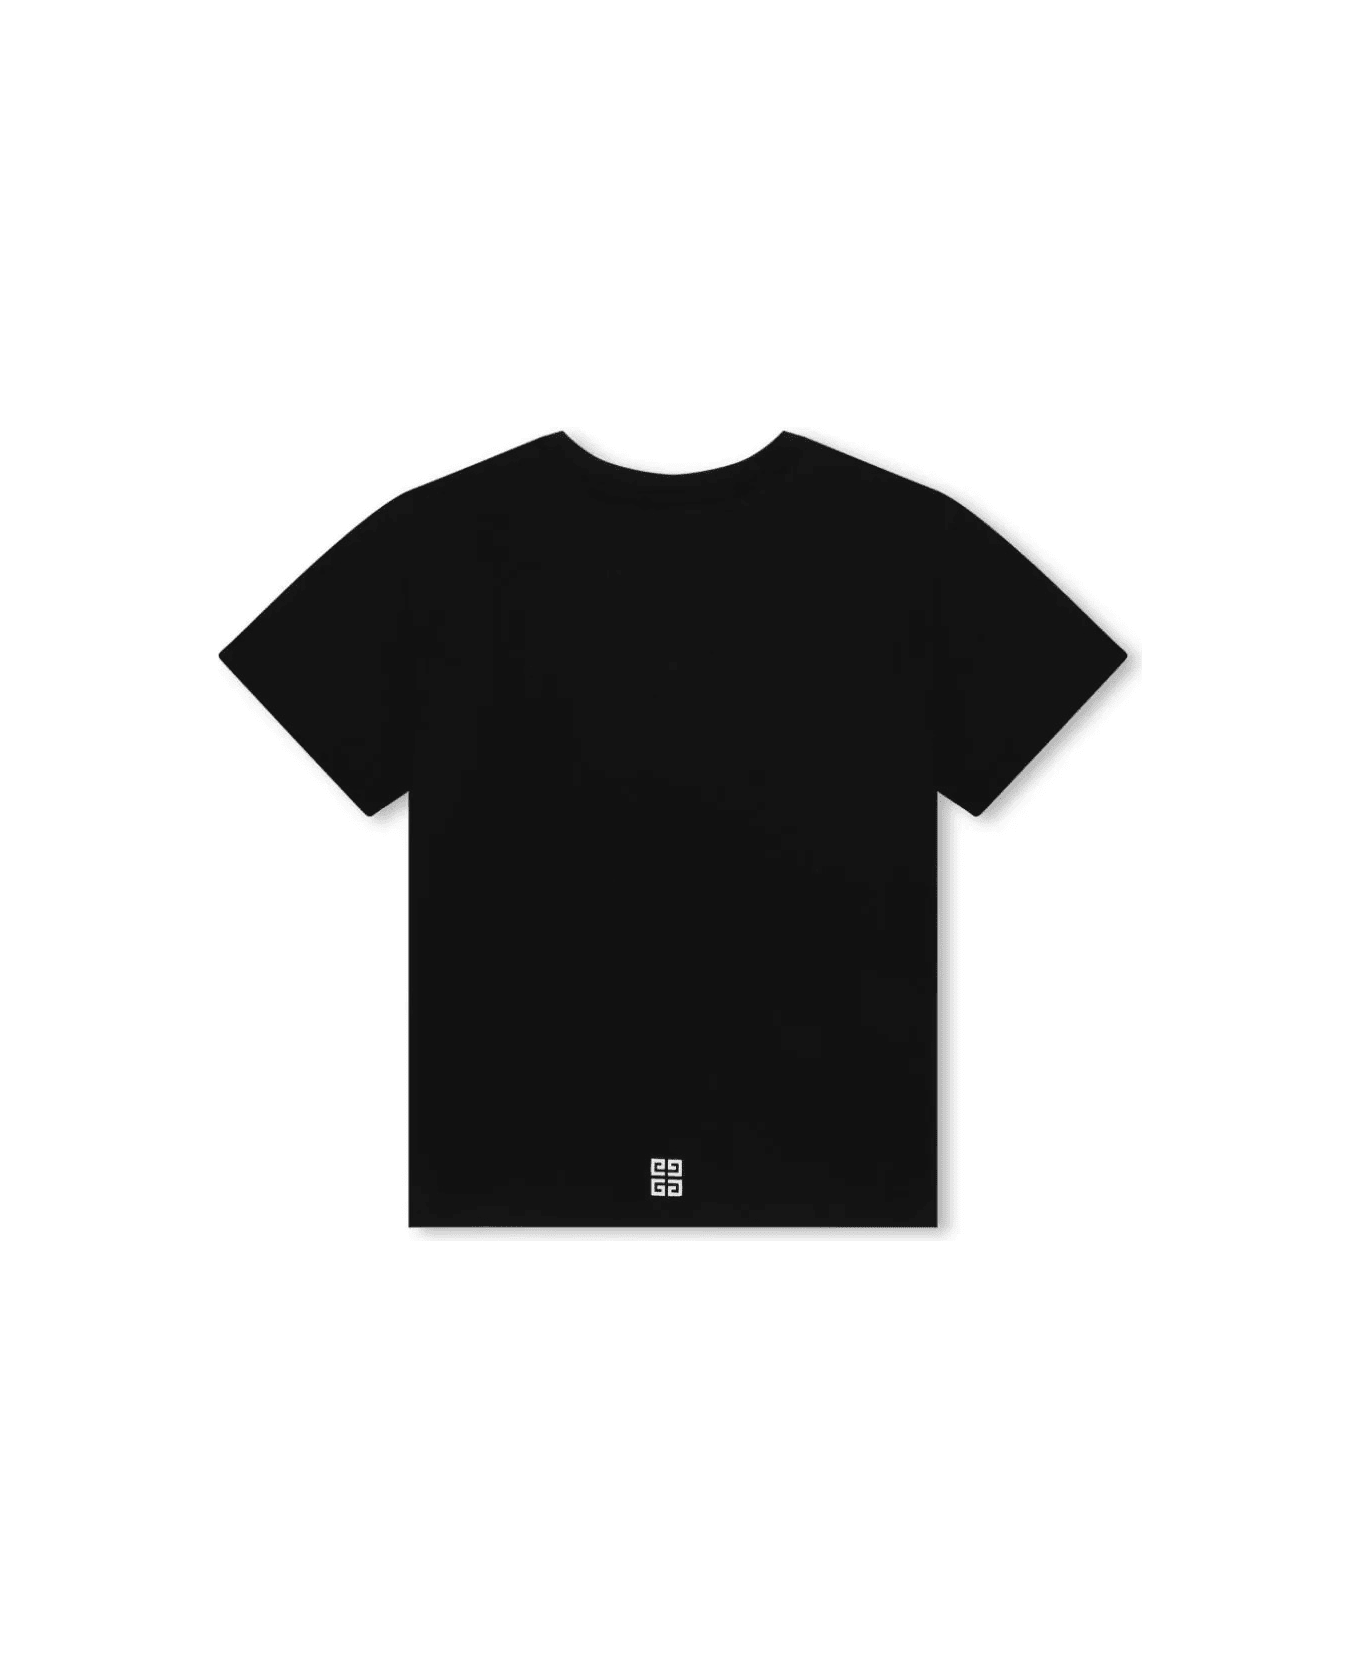 Givenchy Black Givenchy 4g T-shirt - B Nero